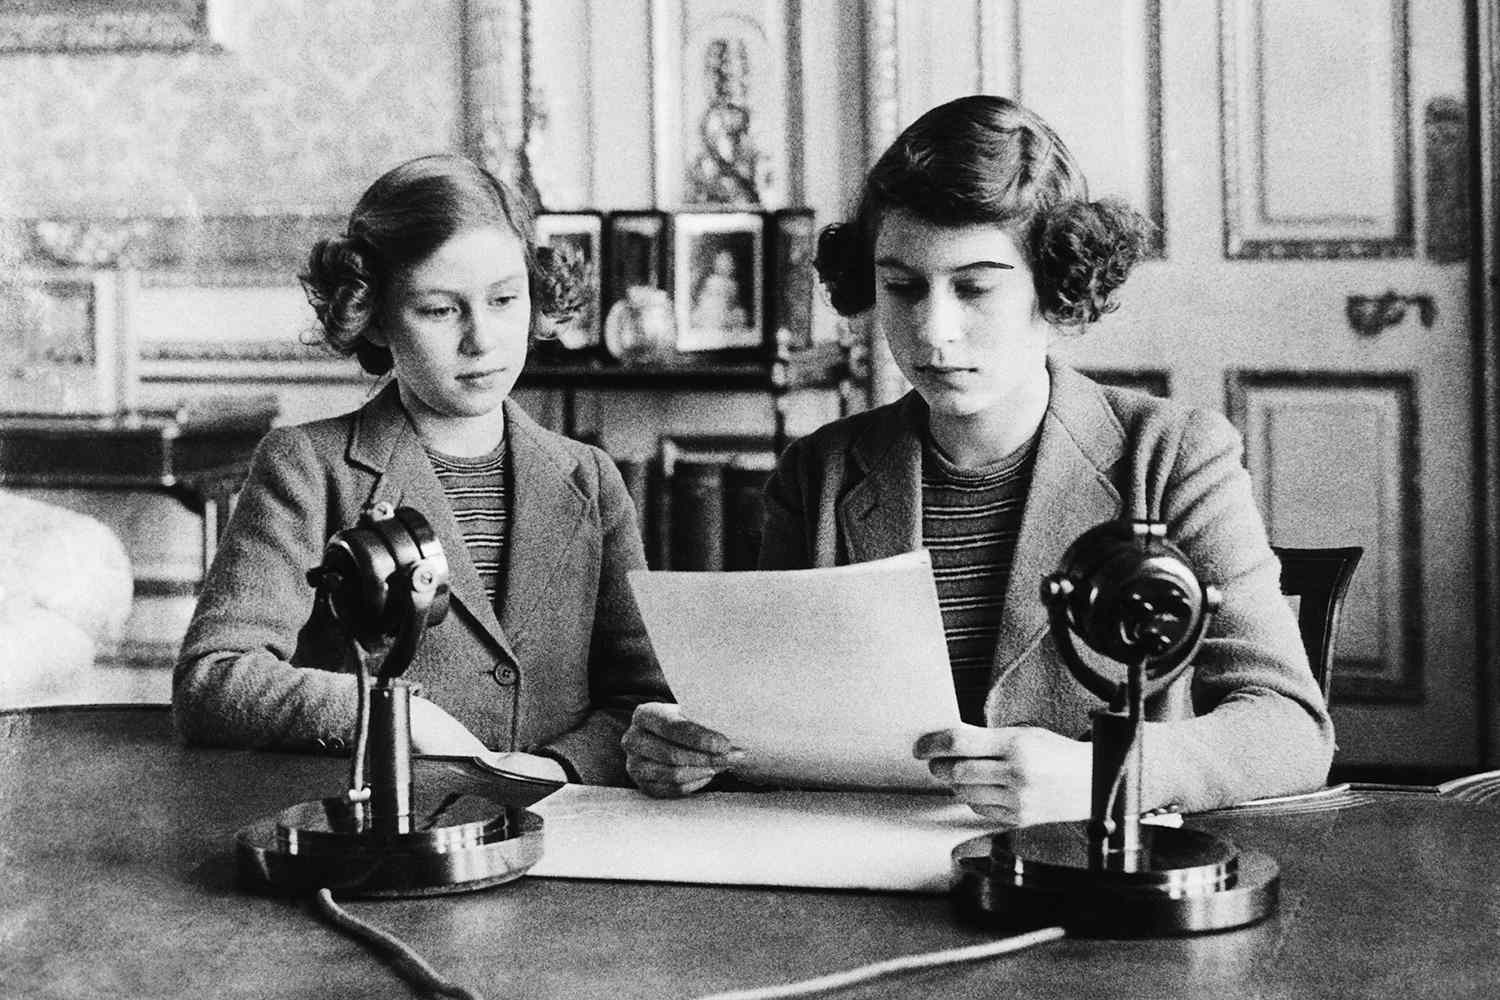 British Royal Family. Future Countess of Snowdon Princess Margaret and Future Queen of England Princess Elizabeth, preparing for a radio address, circa early 1940s.